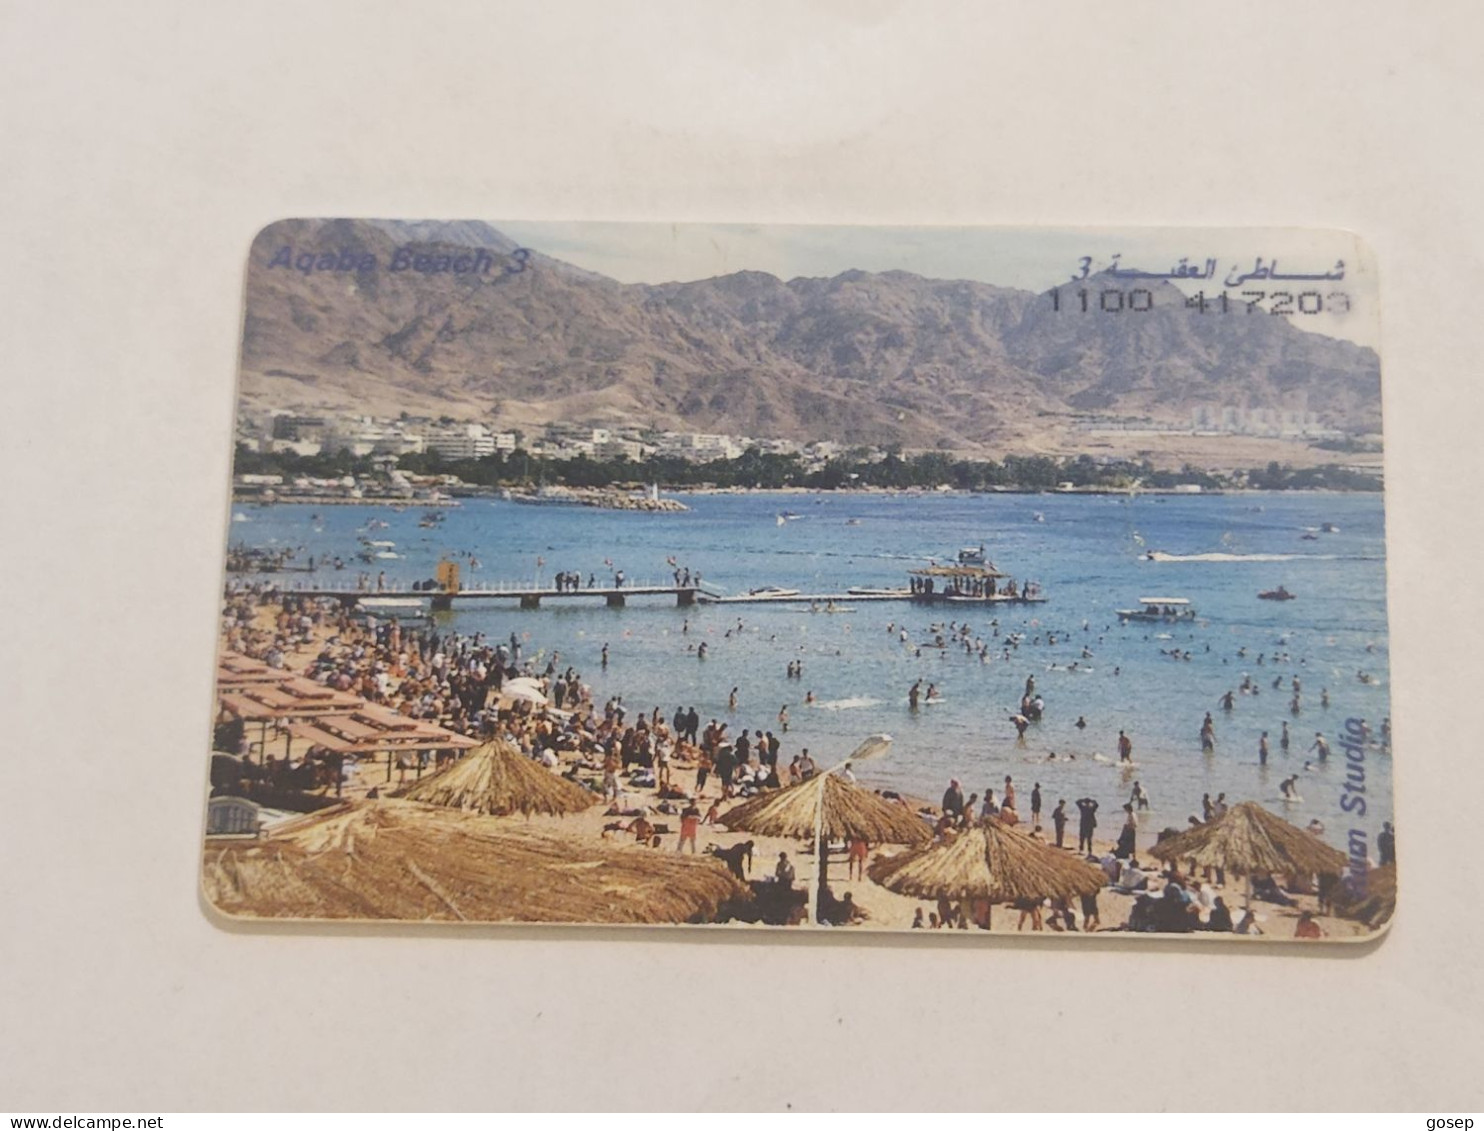 JORDAN-(JO-ALO-0027)-Aqaba Beach-(121)-(1100-417203)-(3JD)-(9/2000)-used Card+1card Prepiad Free - Jordan